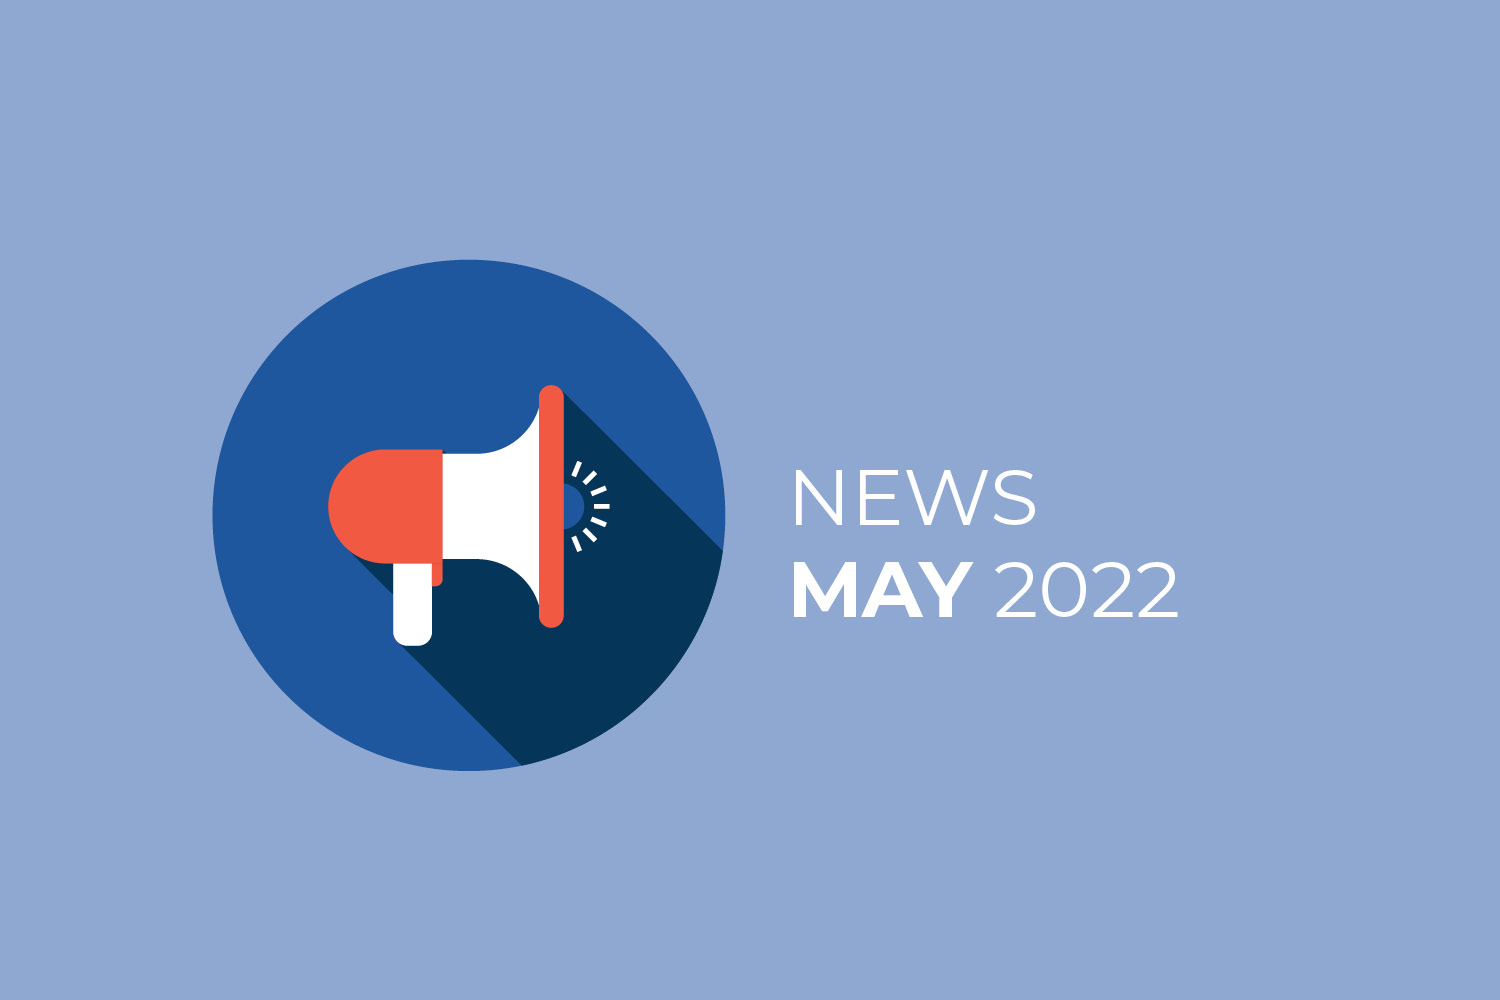 LI key updates - May 2022